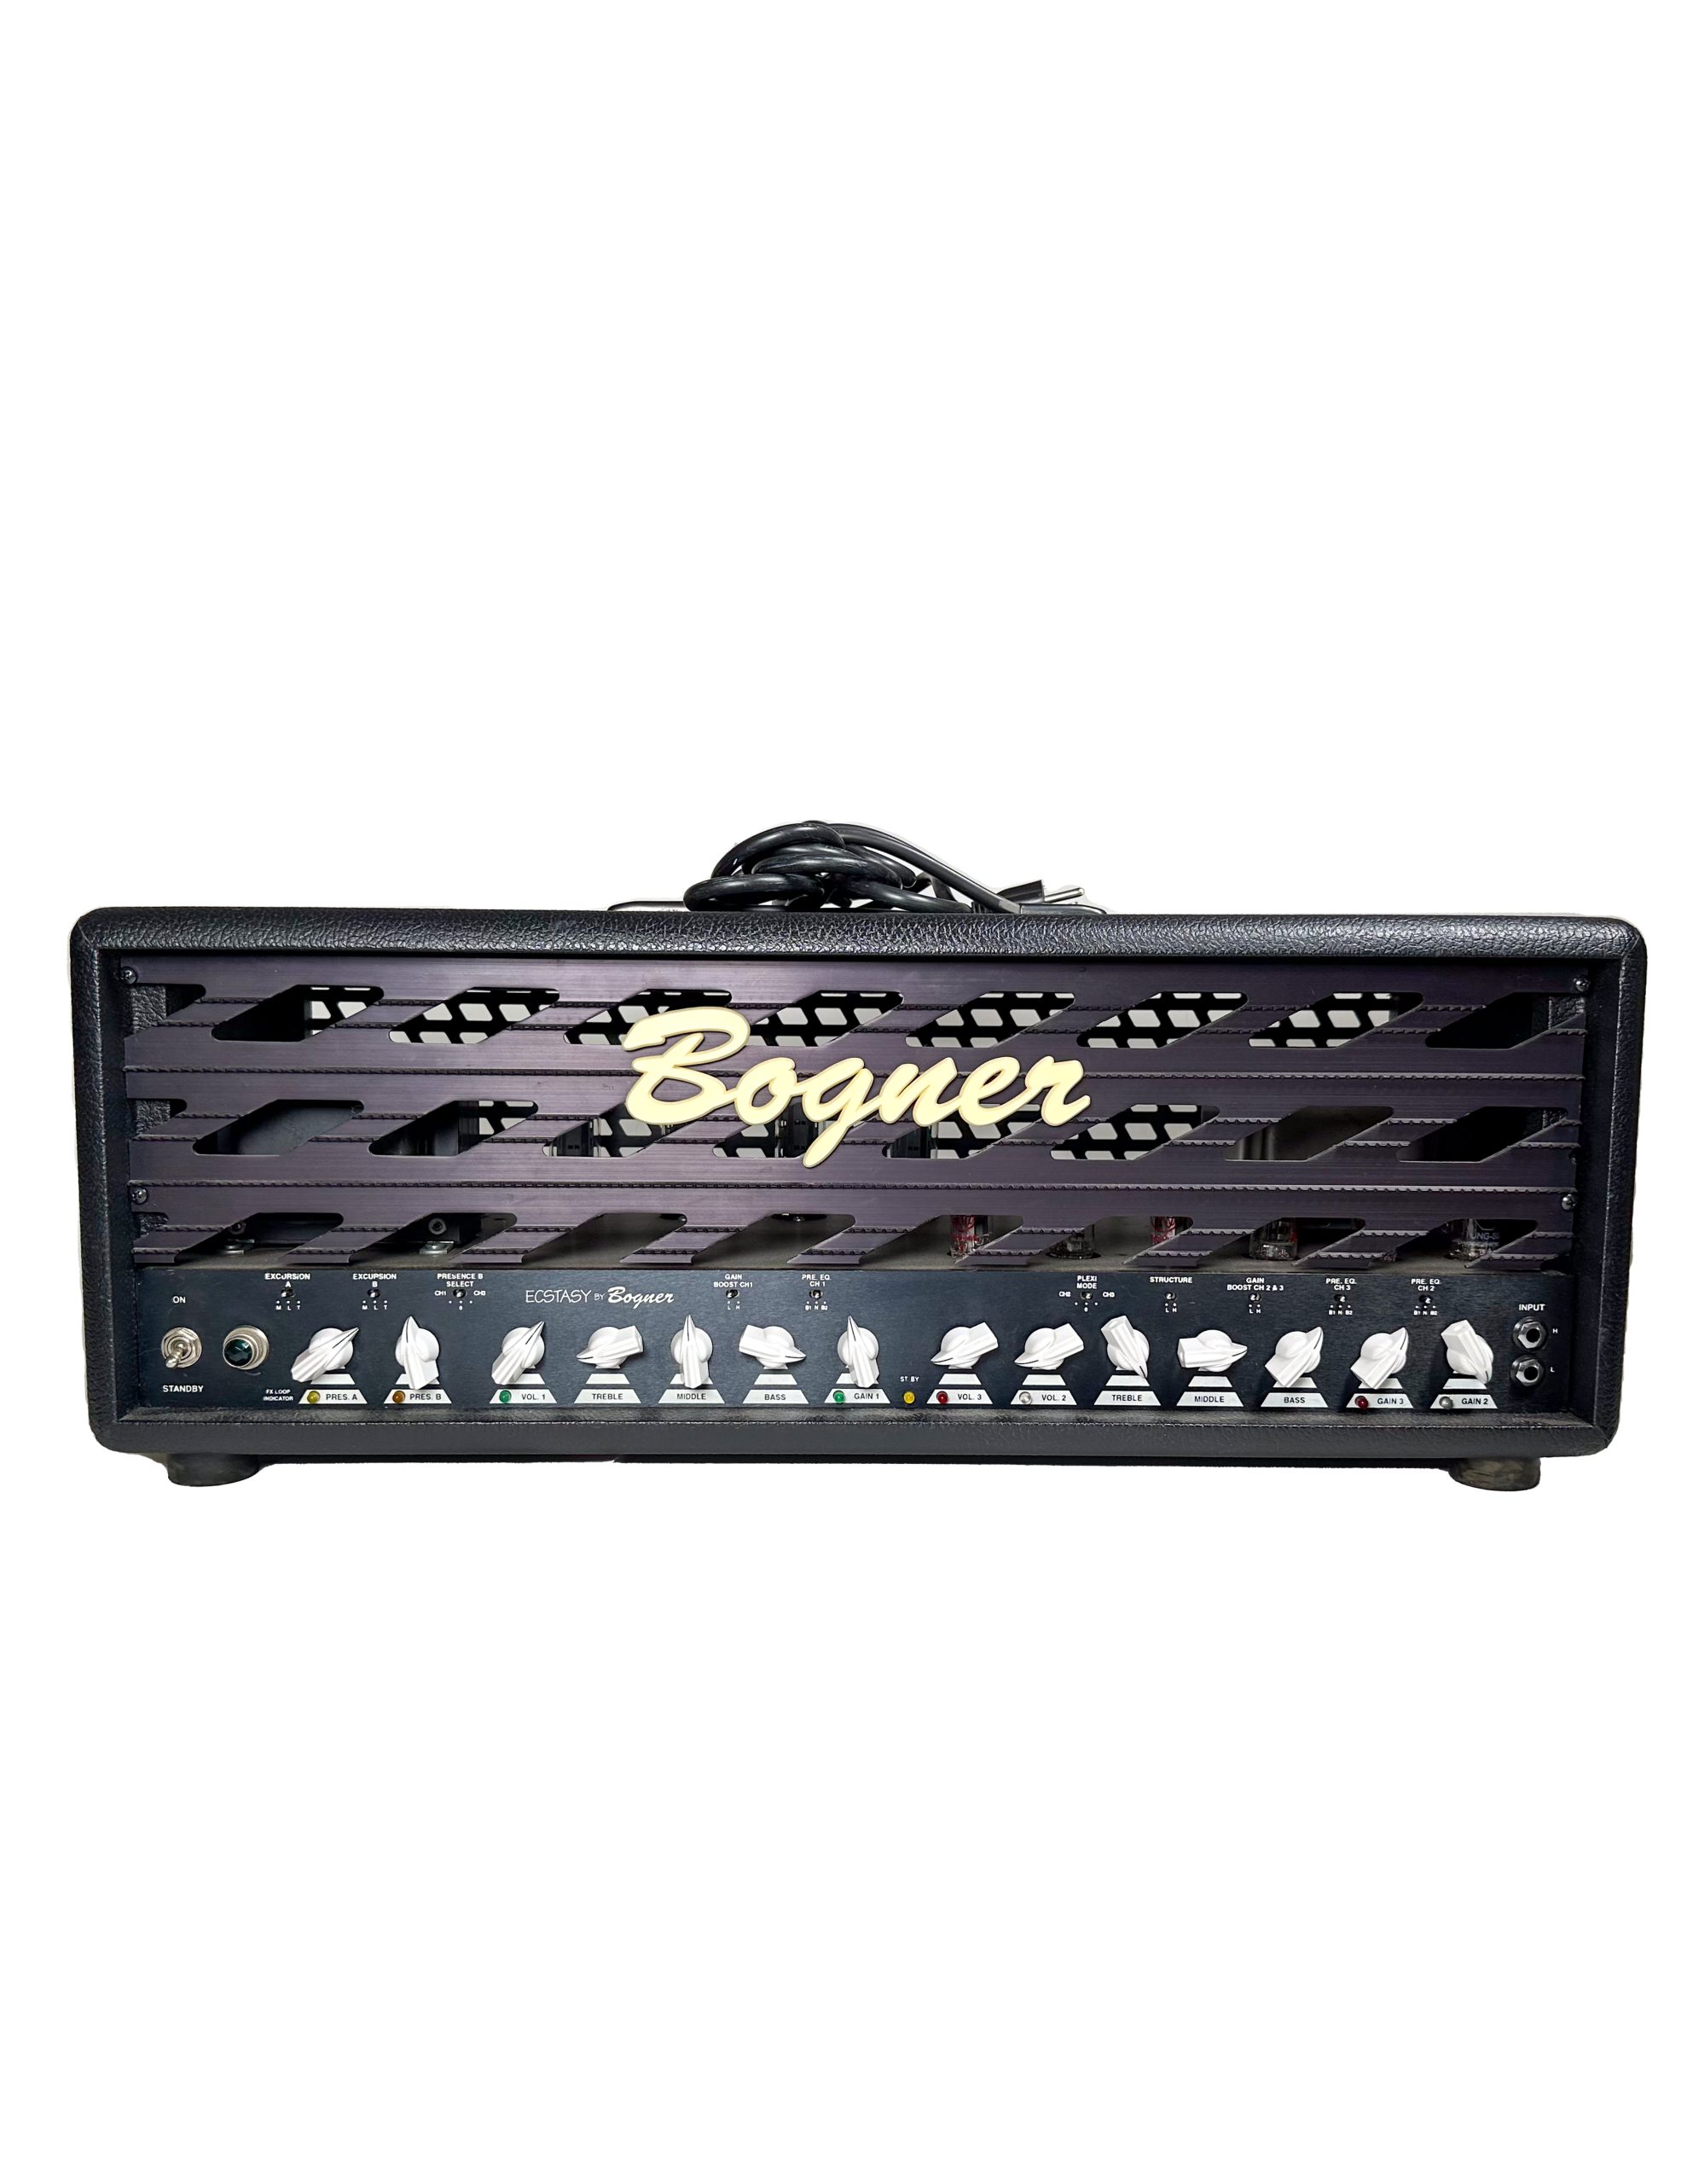 1996 Bogner Ecstasy XTC 101B 100B Modded by Mark Cameron / Guitar Head Amplifier